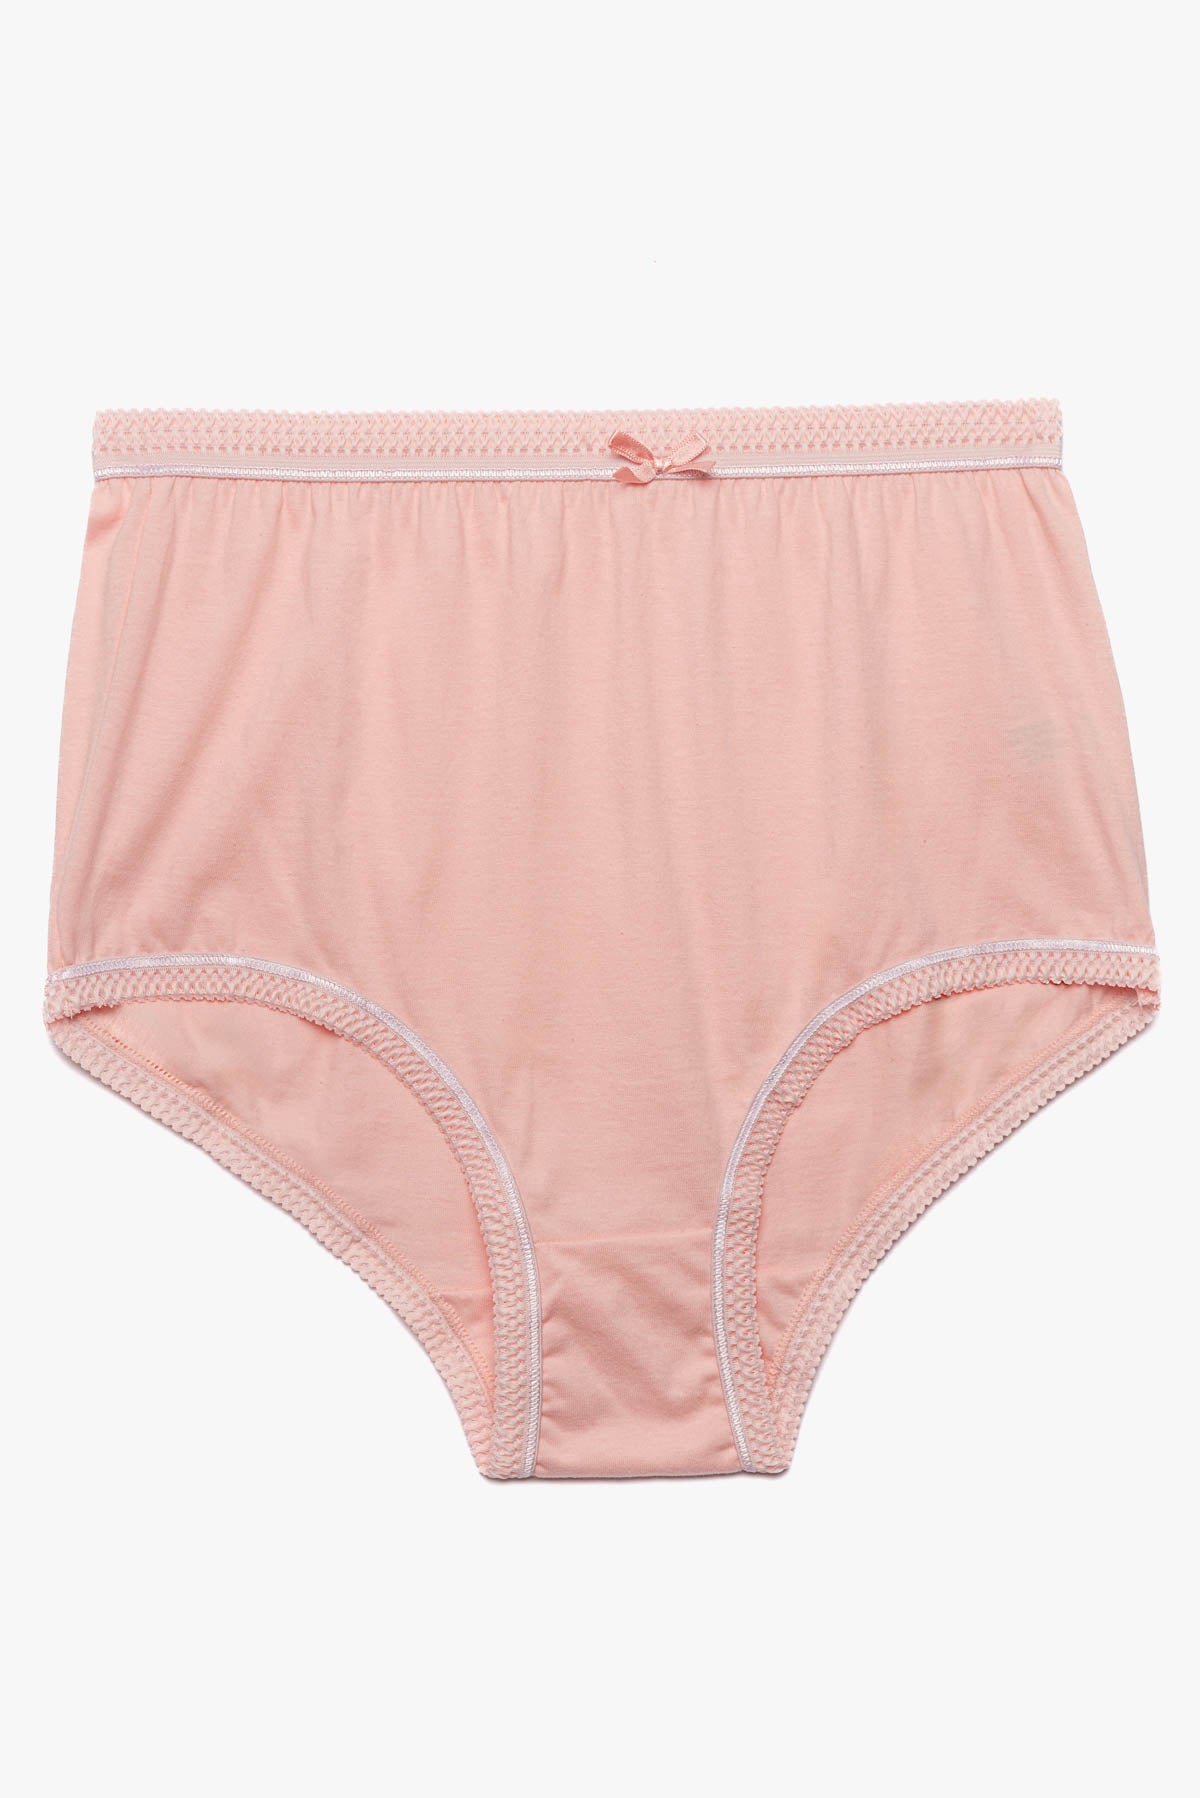 Buy Adira Modal Cotton Panties Womens Underwear Super Soft Cotton - Pack Of  2 - Dark Pink & Maroon online